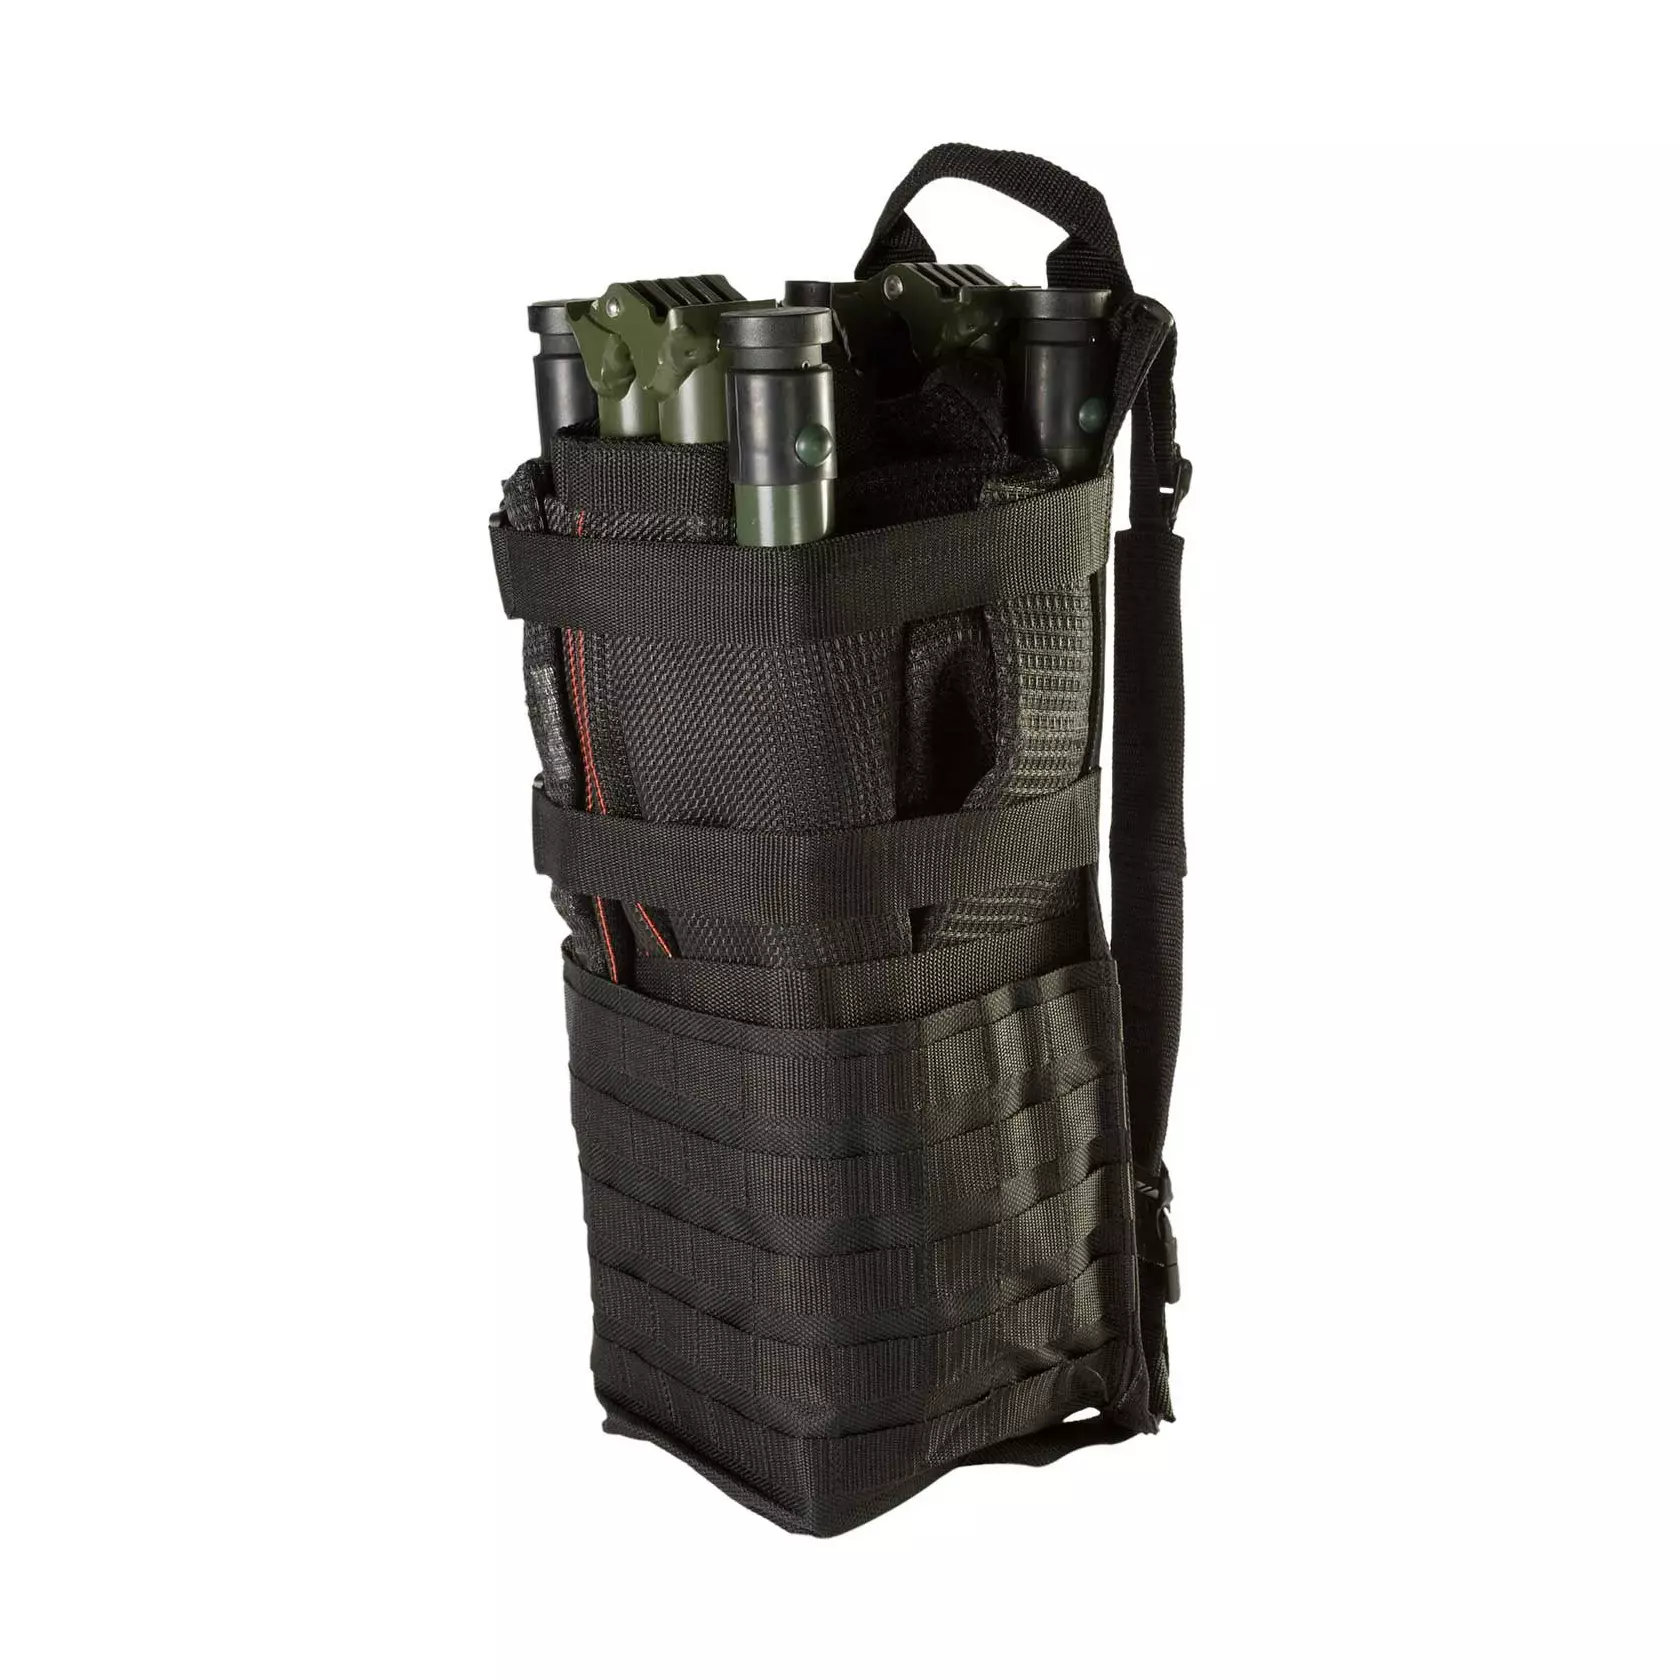 Carrying case for NAR Talon® II Model 90C - Black